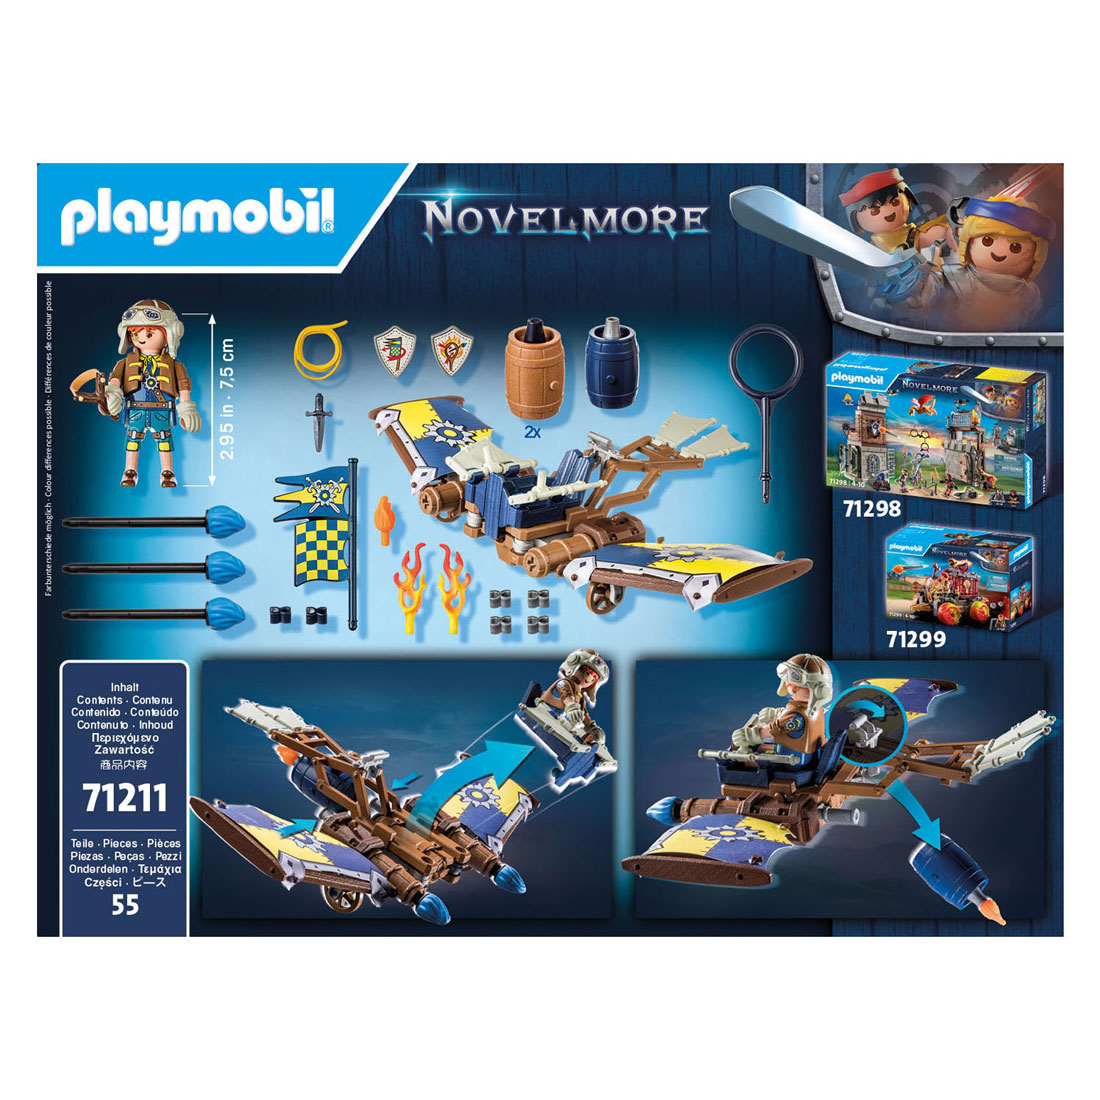 Playmobil Novelmore Darios Segelflugzeug – 71211